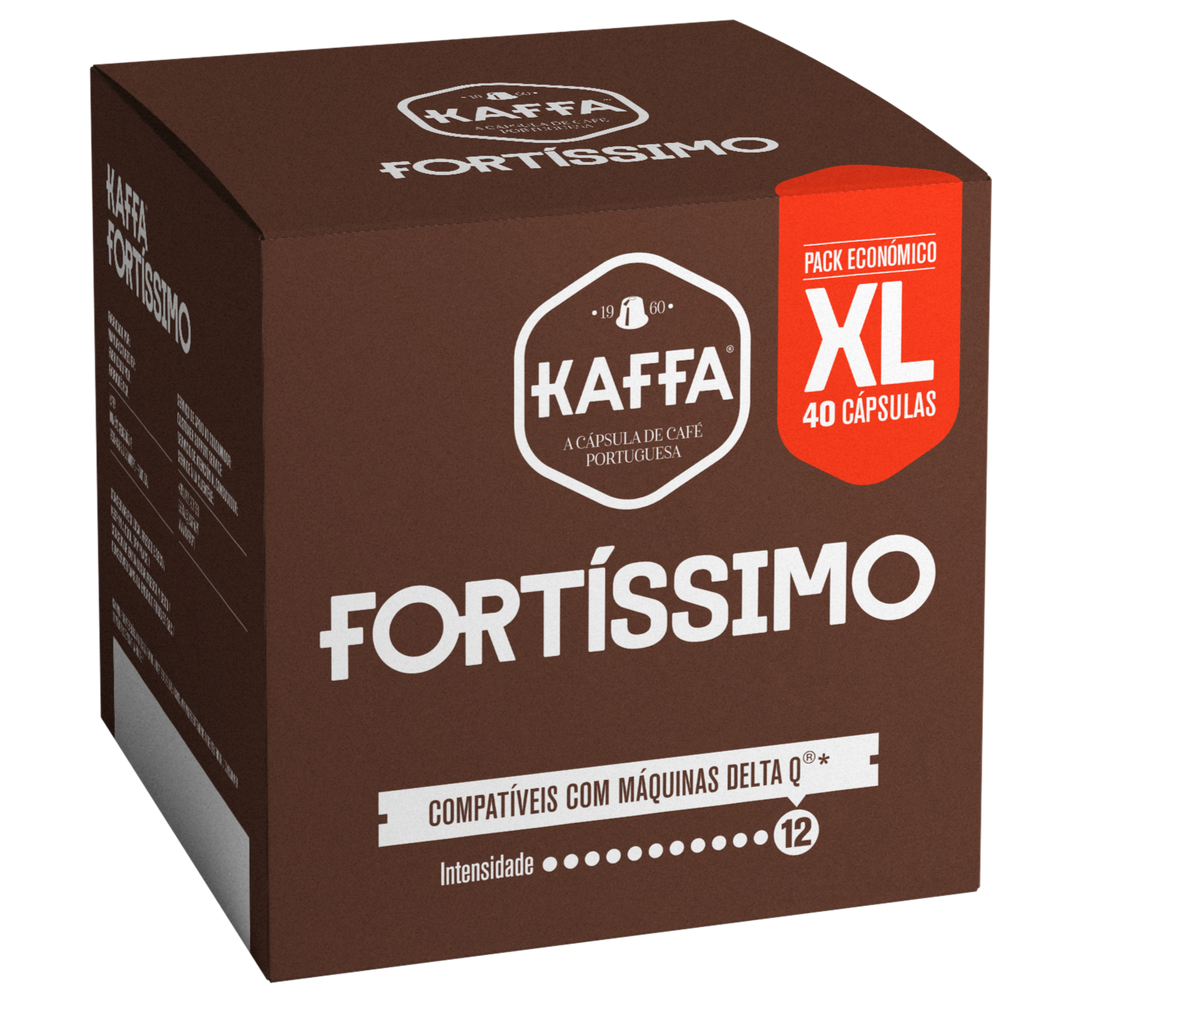 Multicoffee » Capsulas Compatibles Dolce Gusto® Kaffa® Chocolate